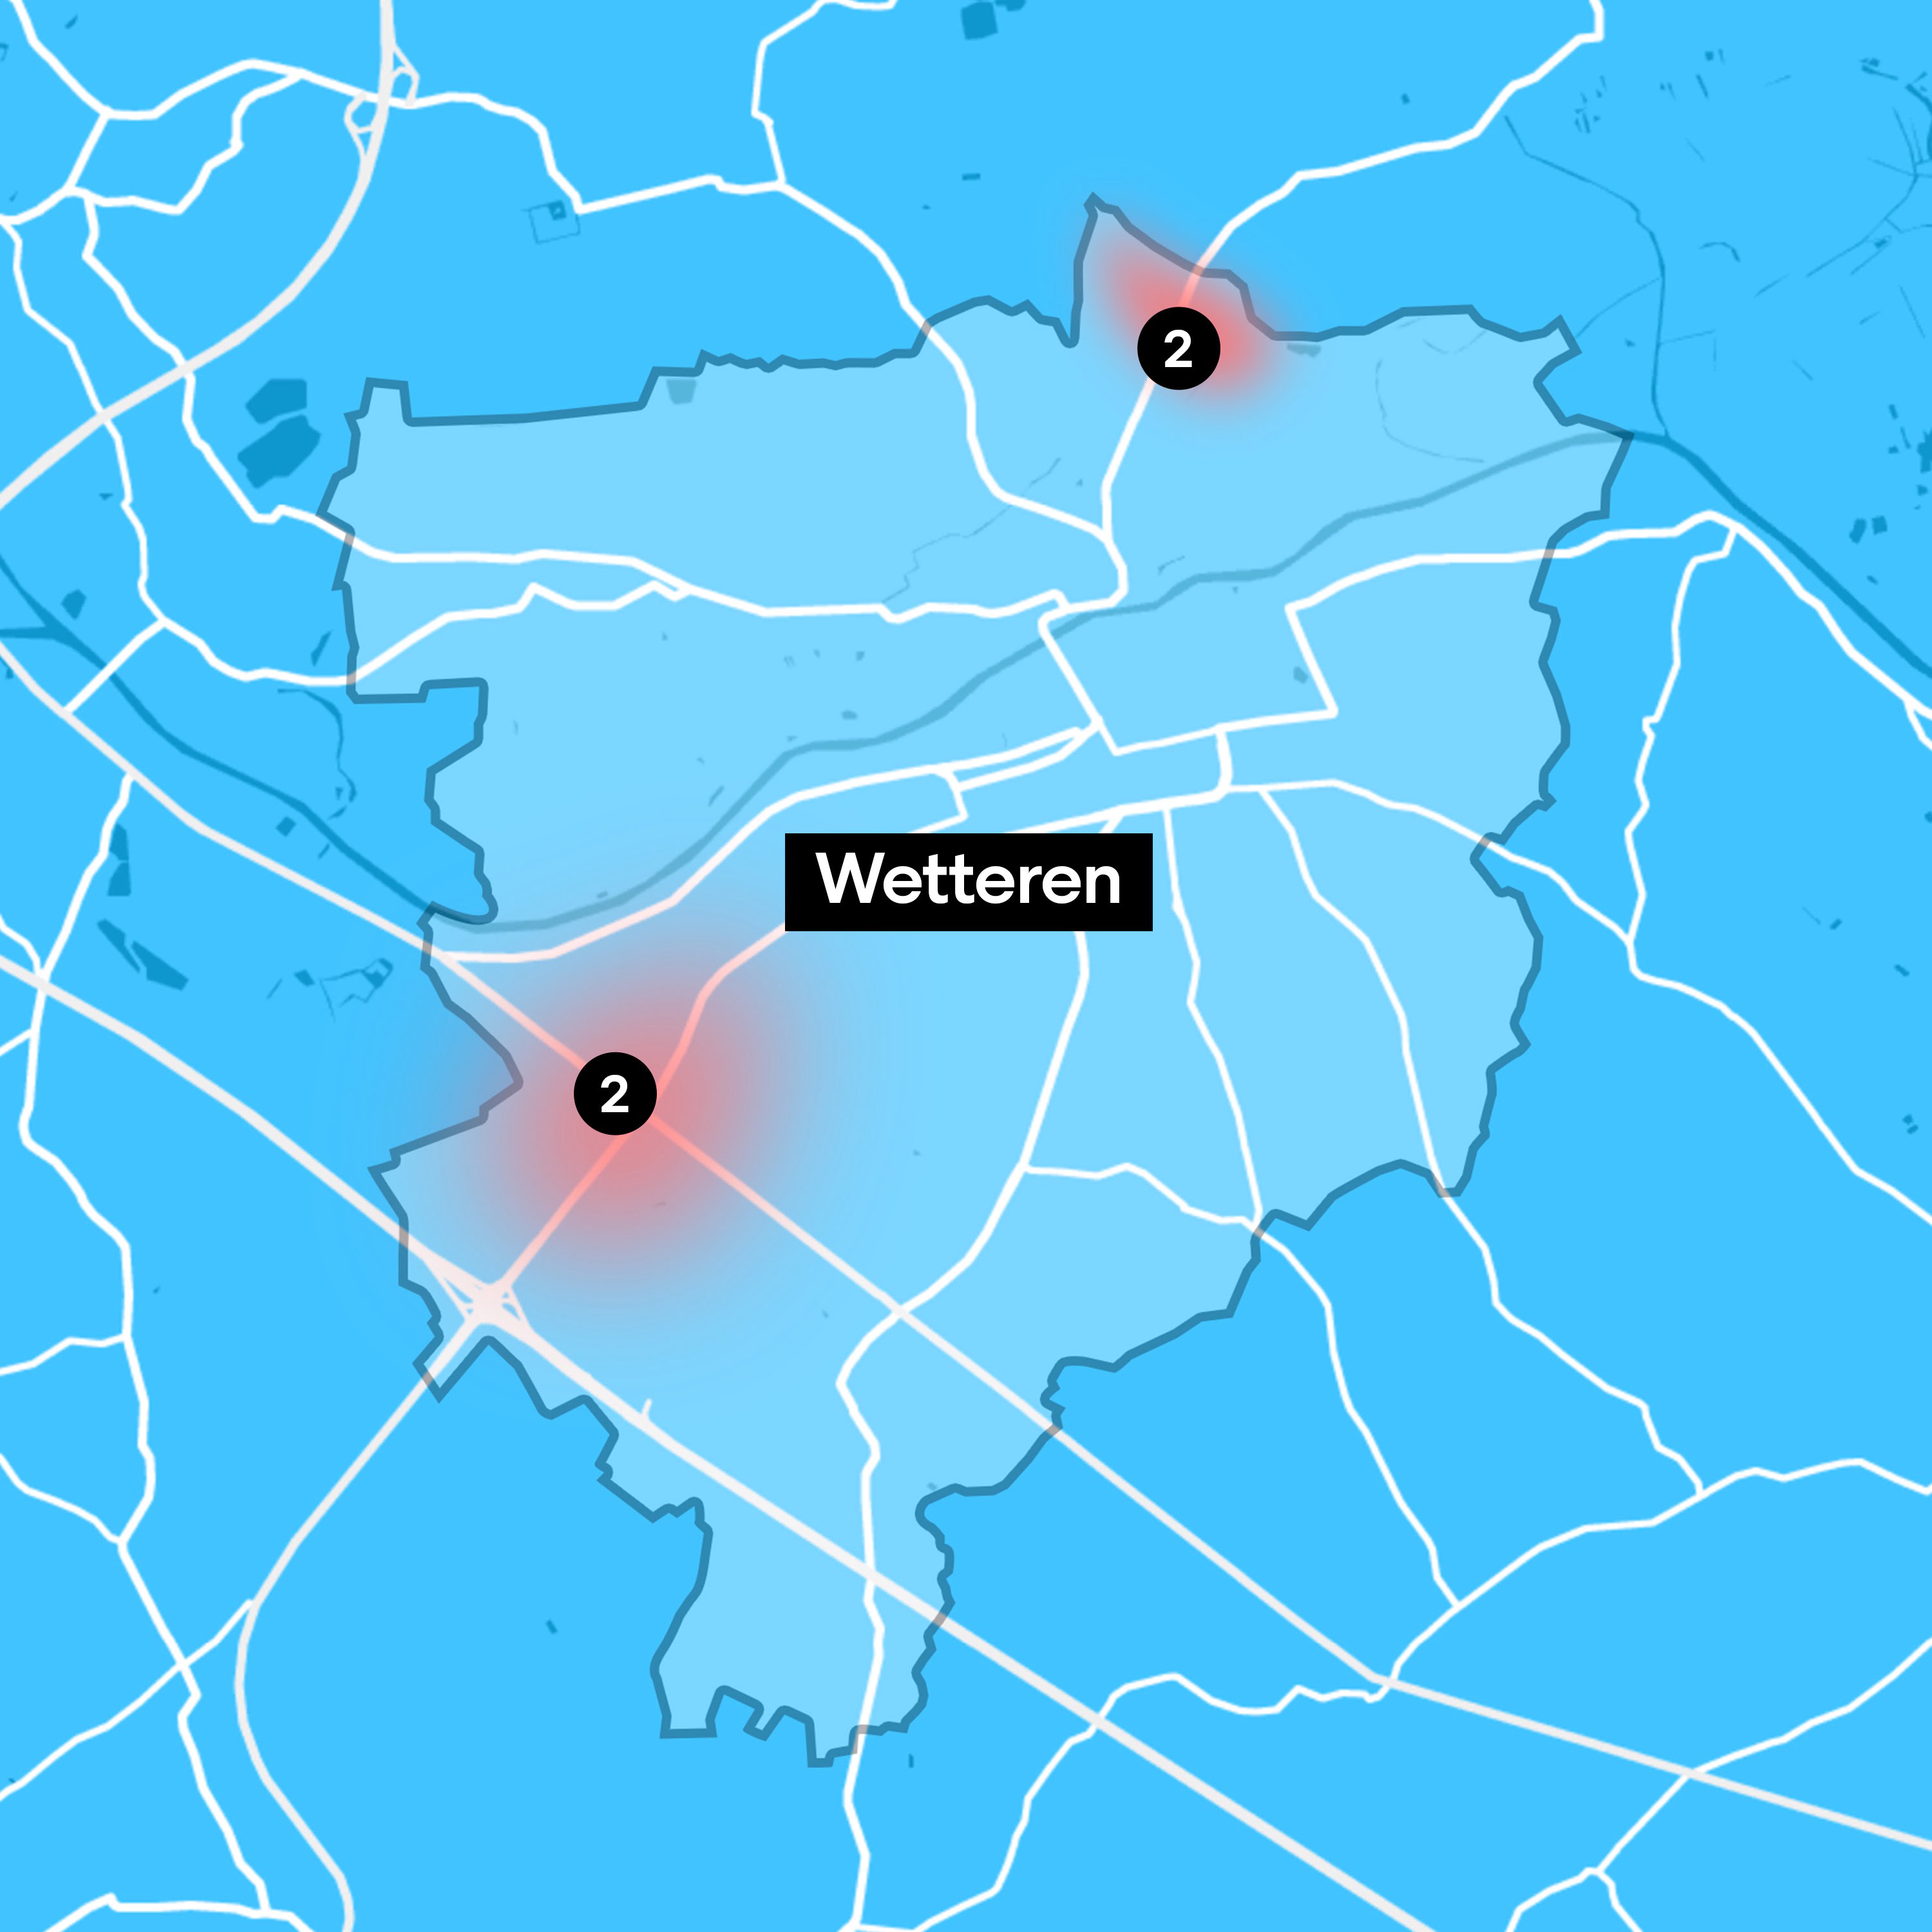 Zonemap Wetteren, Laarne & Melle Z2-2